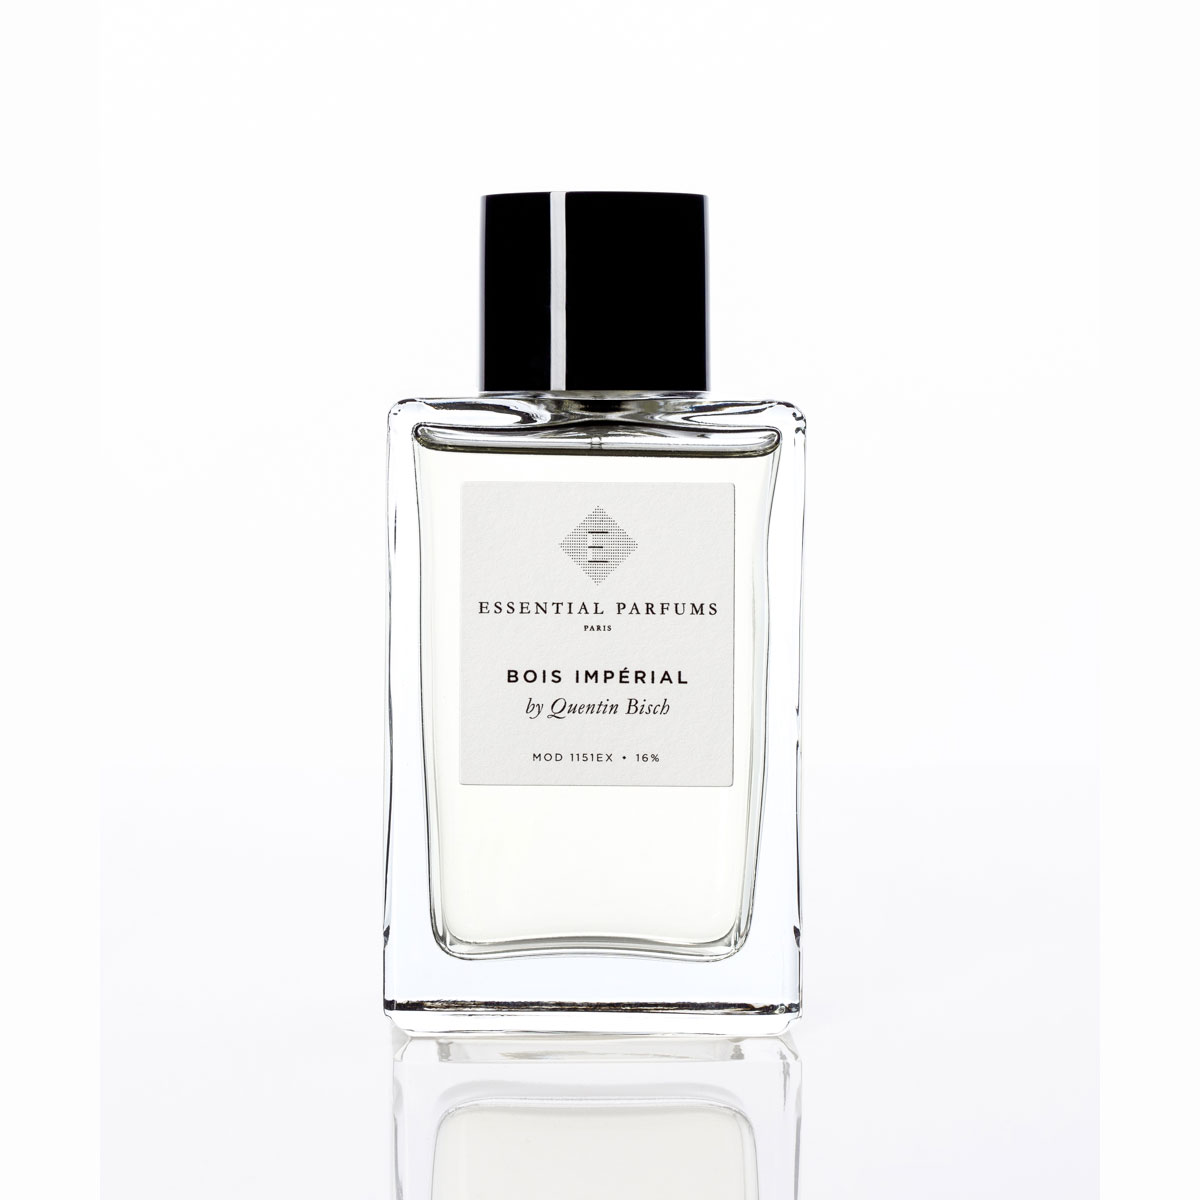 Bois-imperial-essential-parfums_1.png